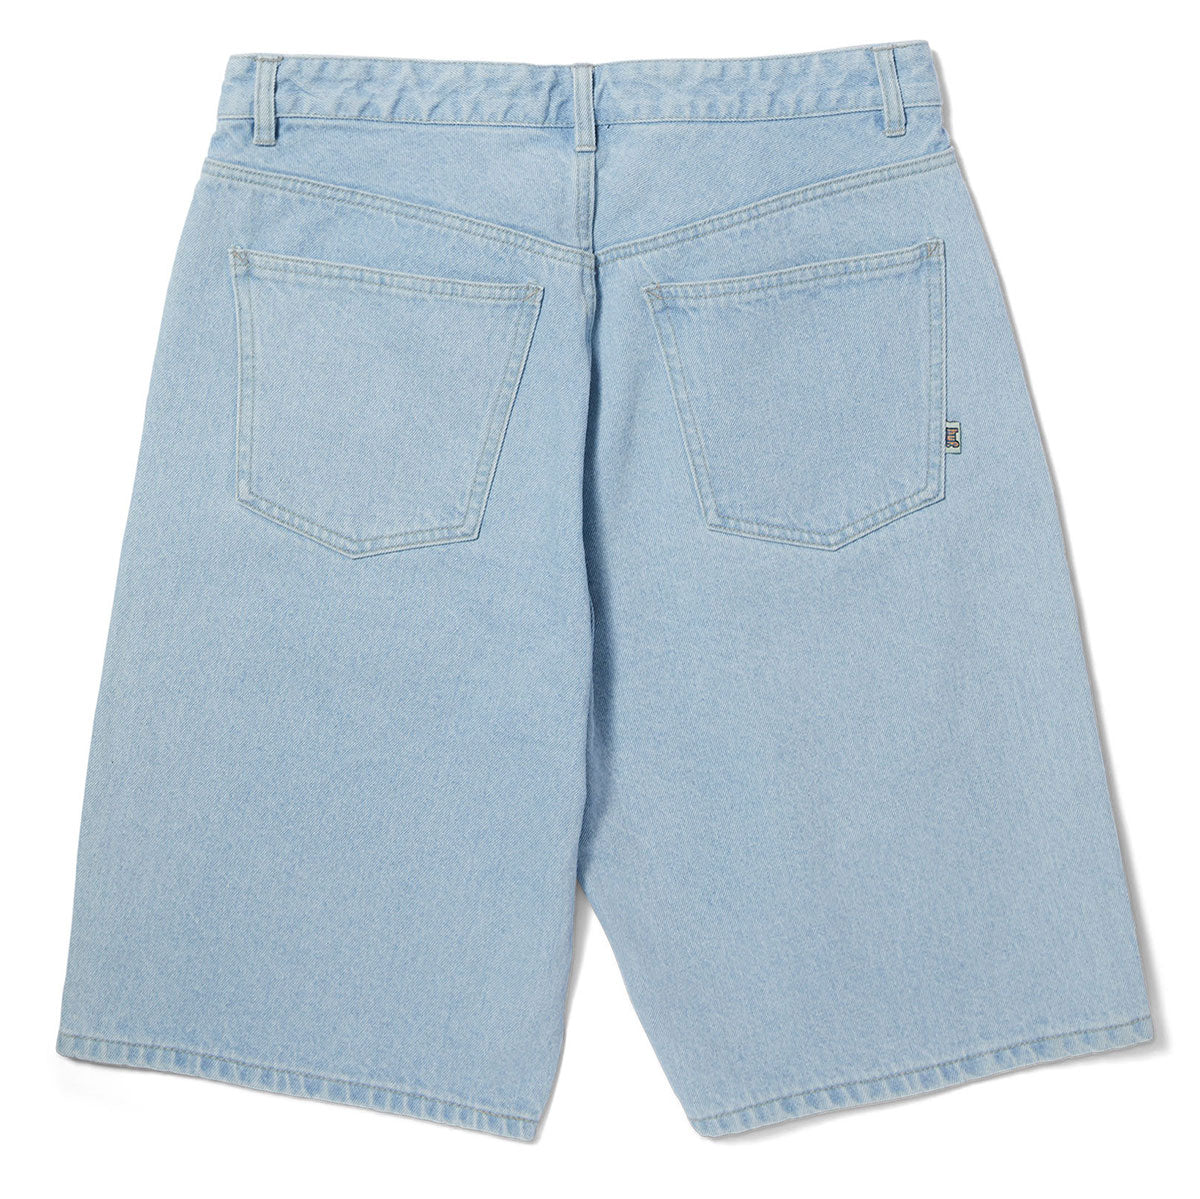 HUF Cromer Shorts - Light Blue image 2